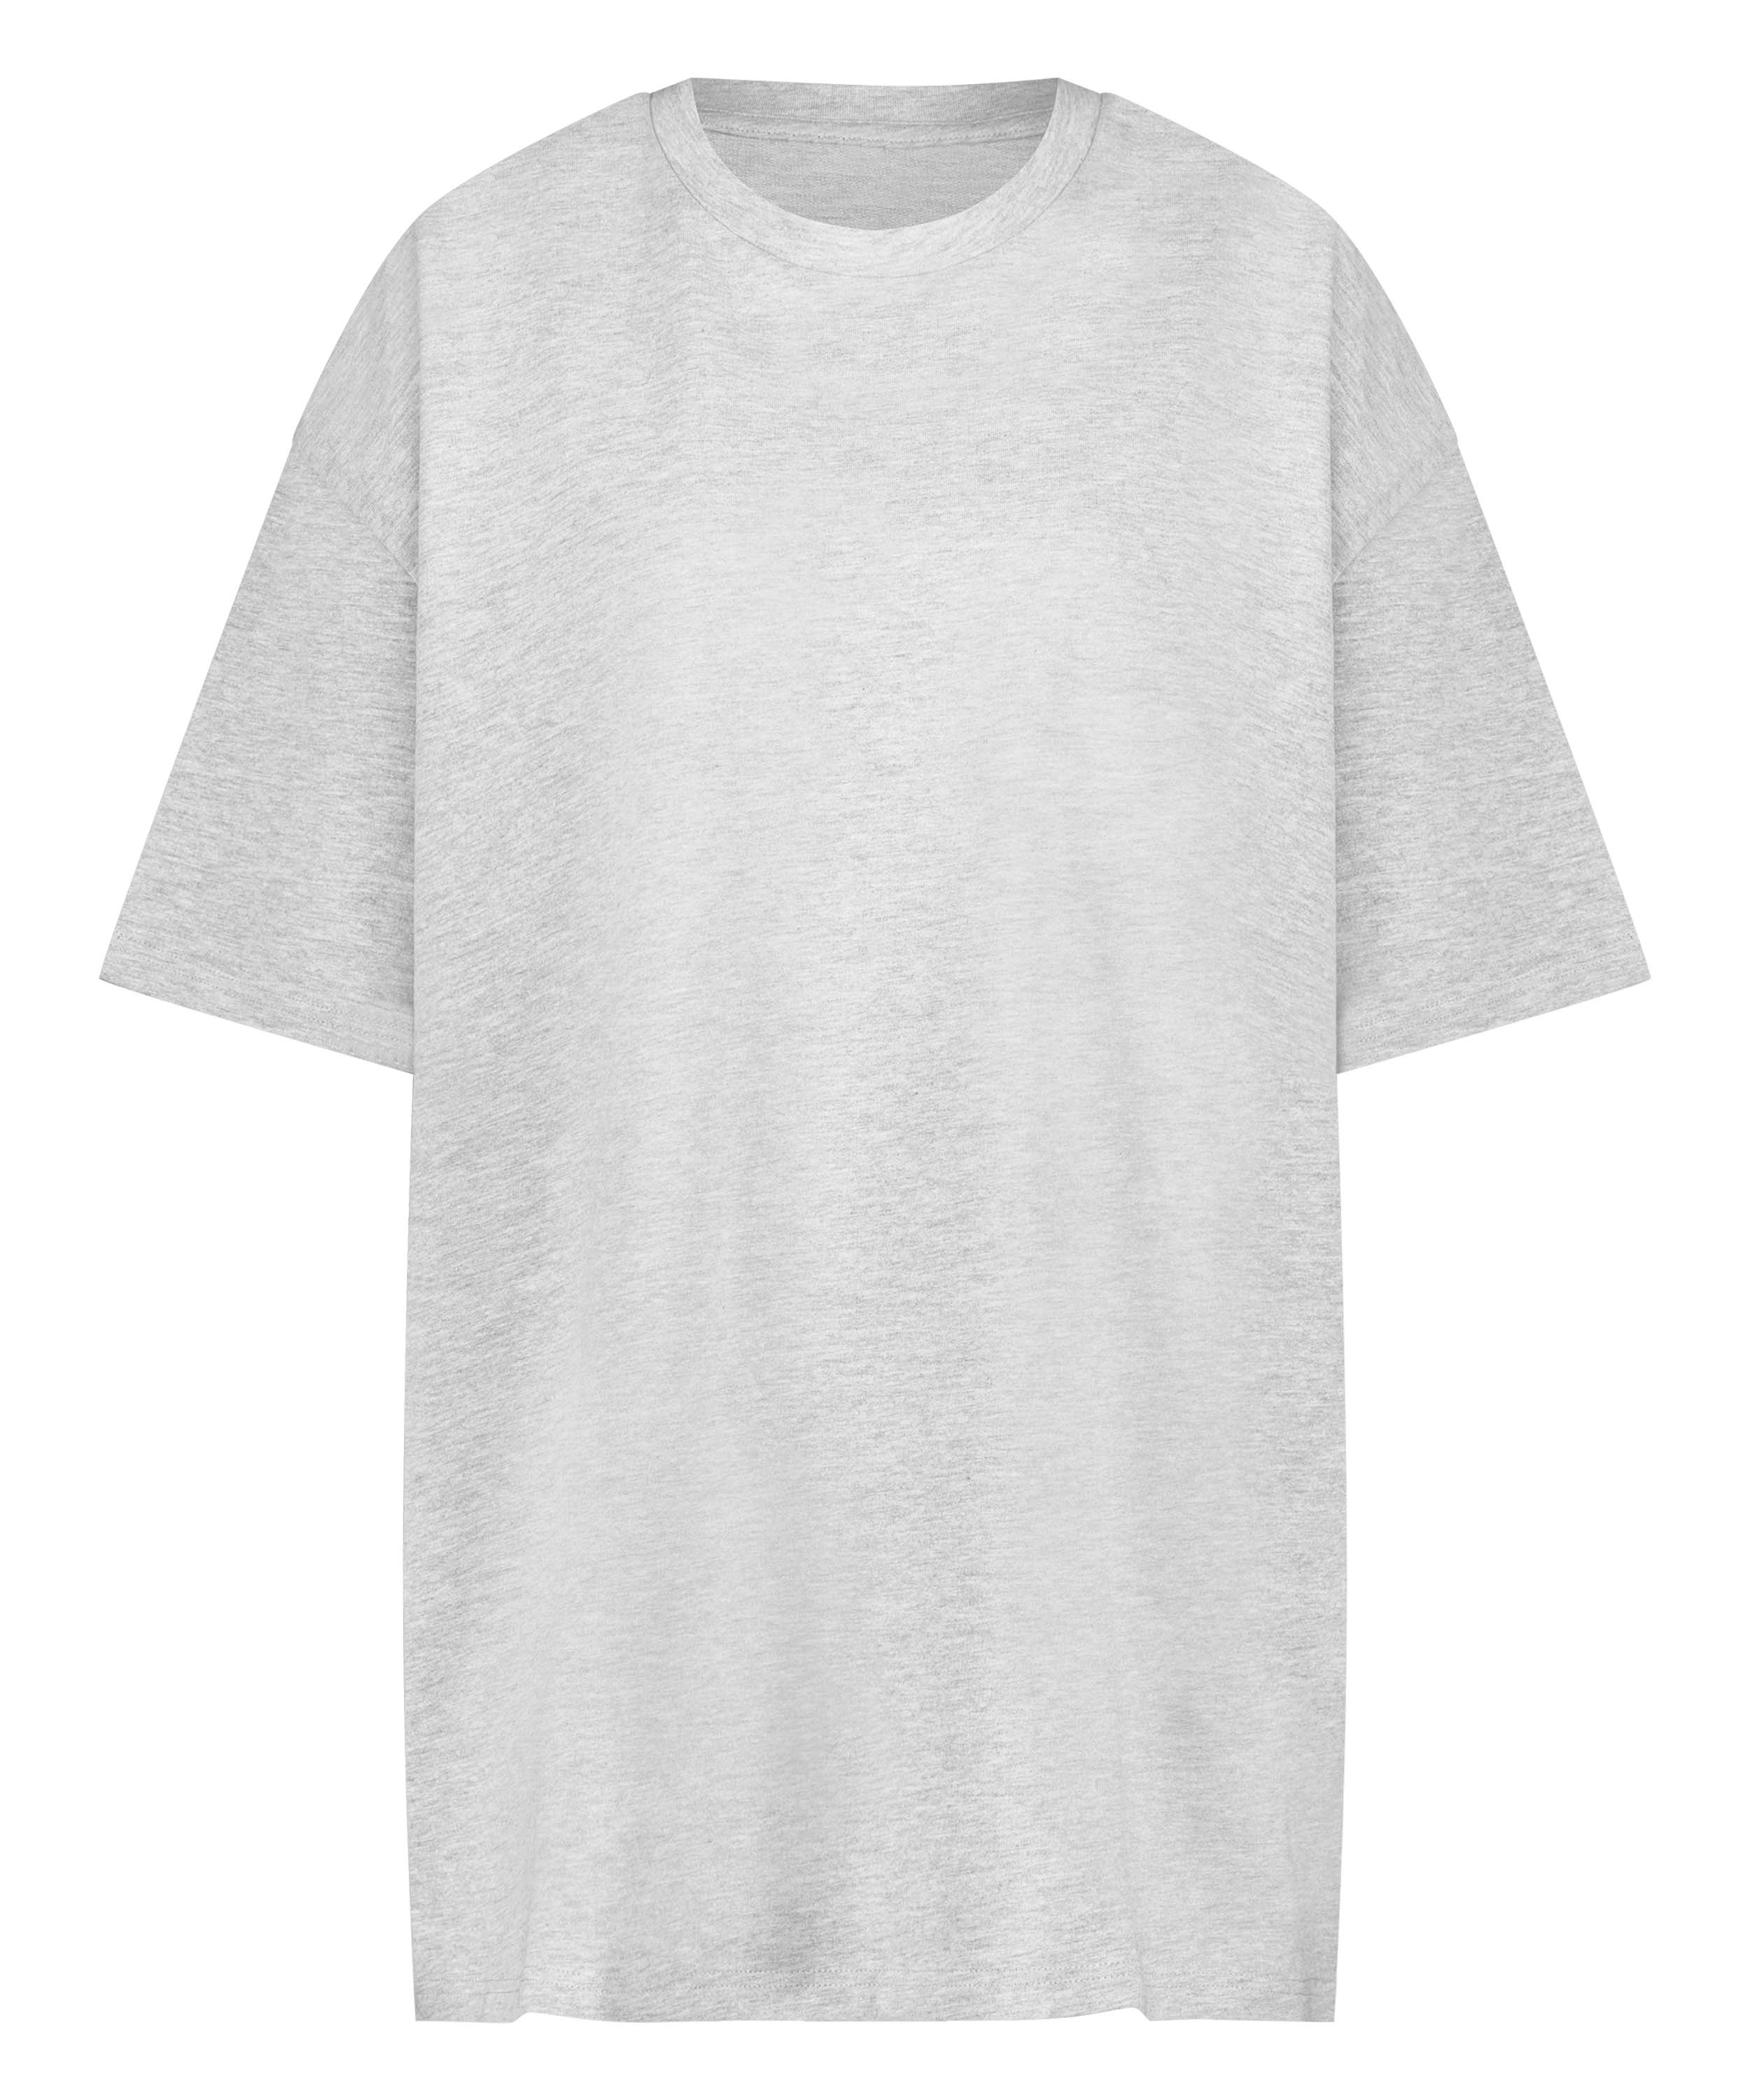 Boyfriend-Shirt mit kurzen Ärmeln, Grau, main